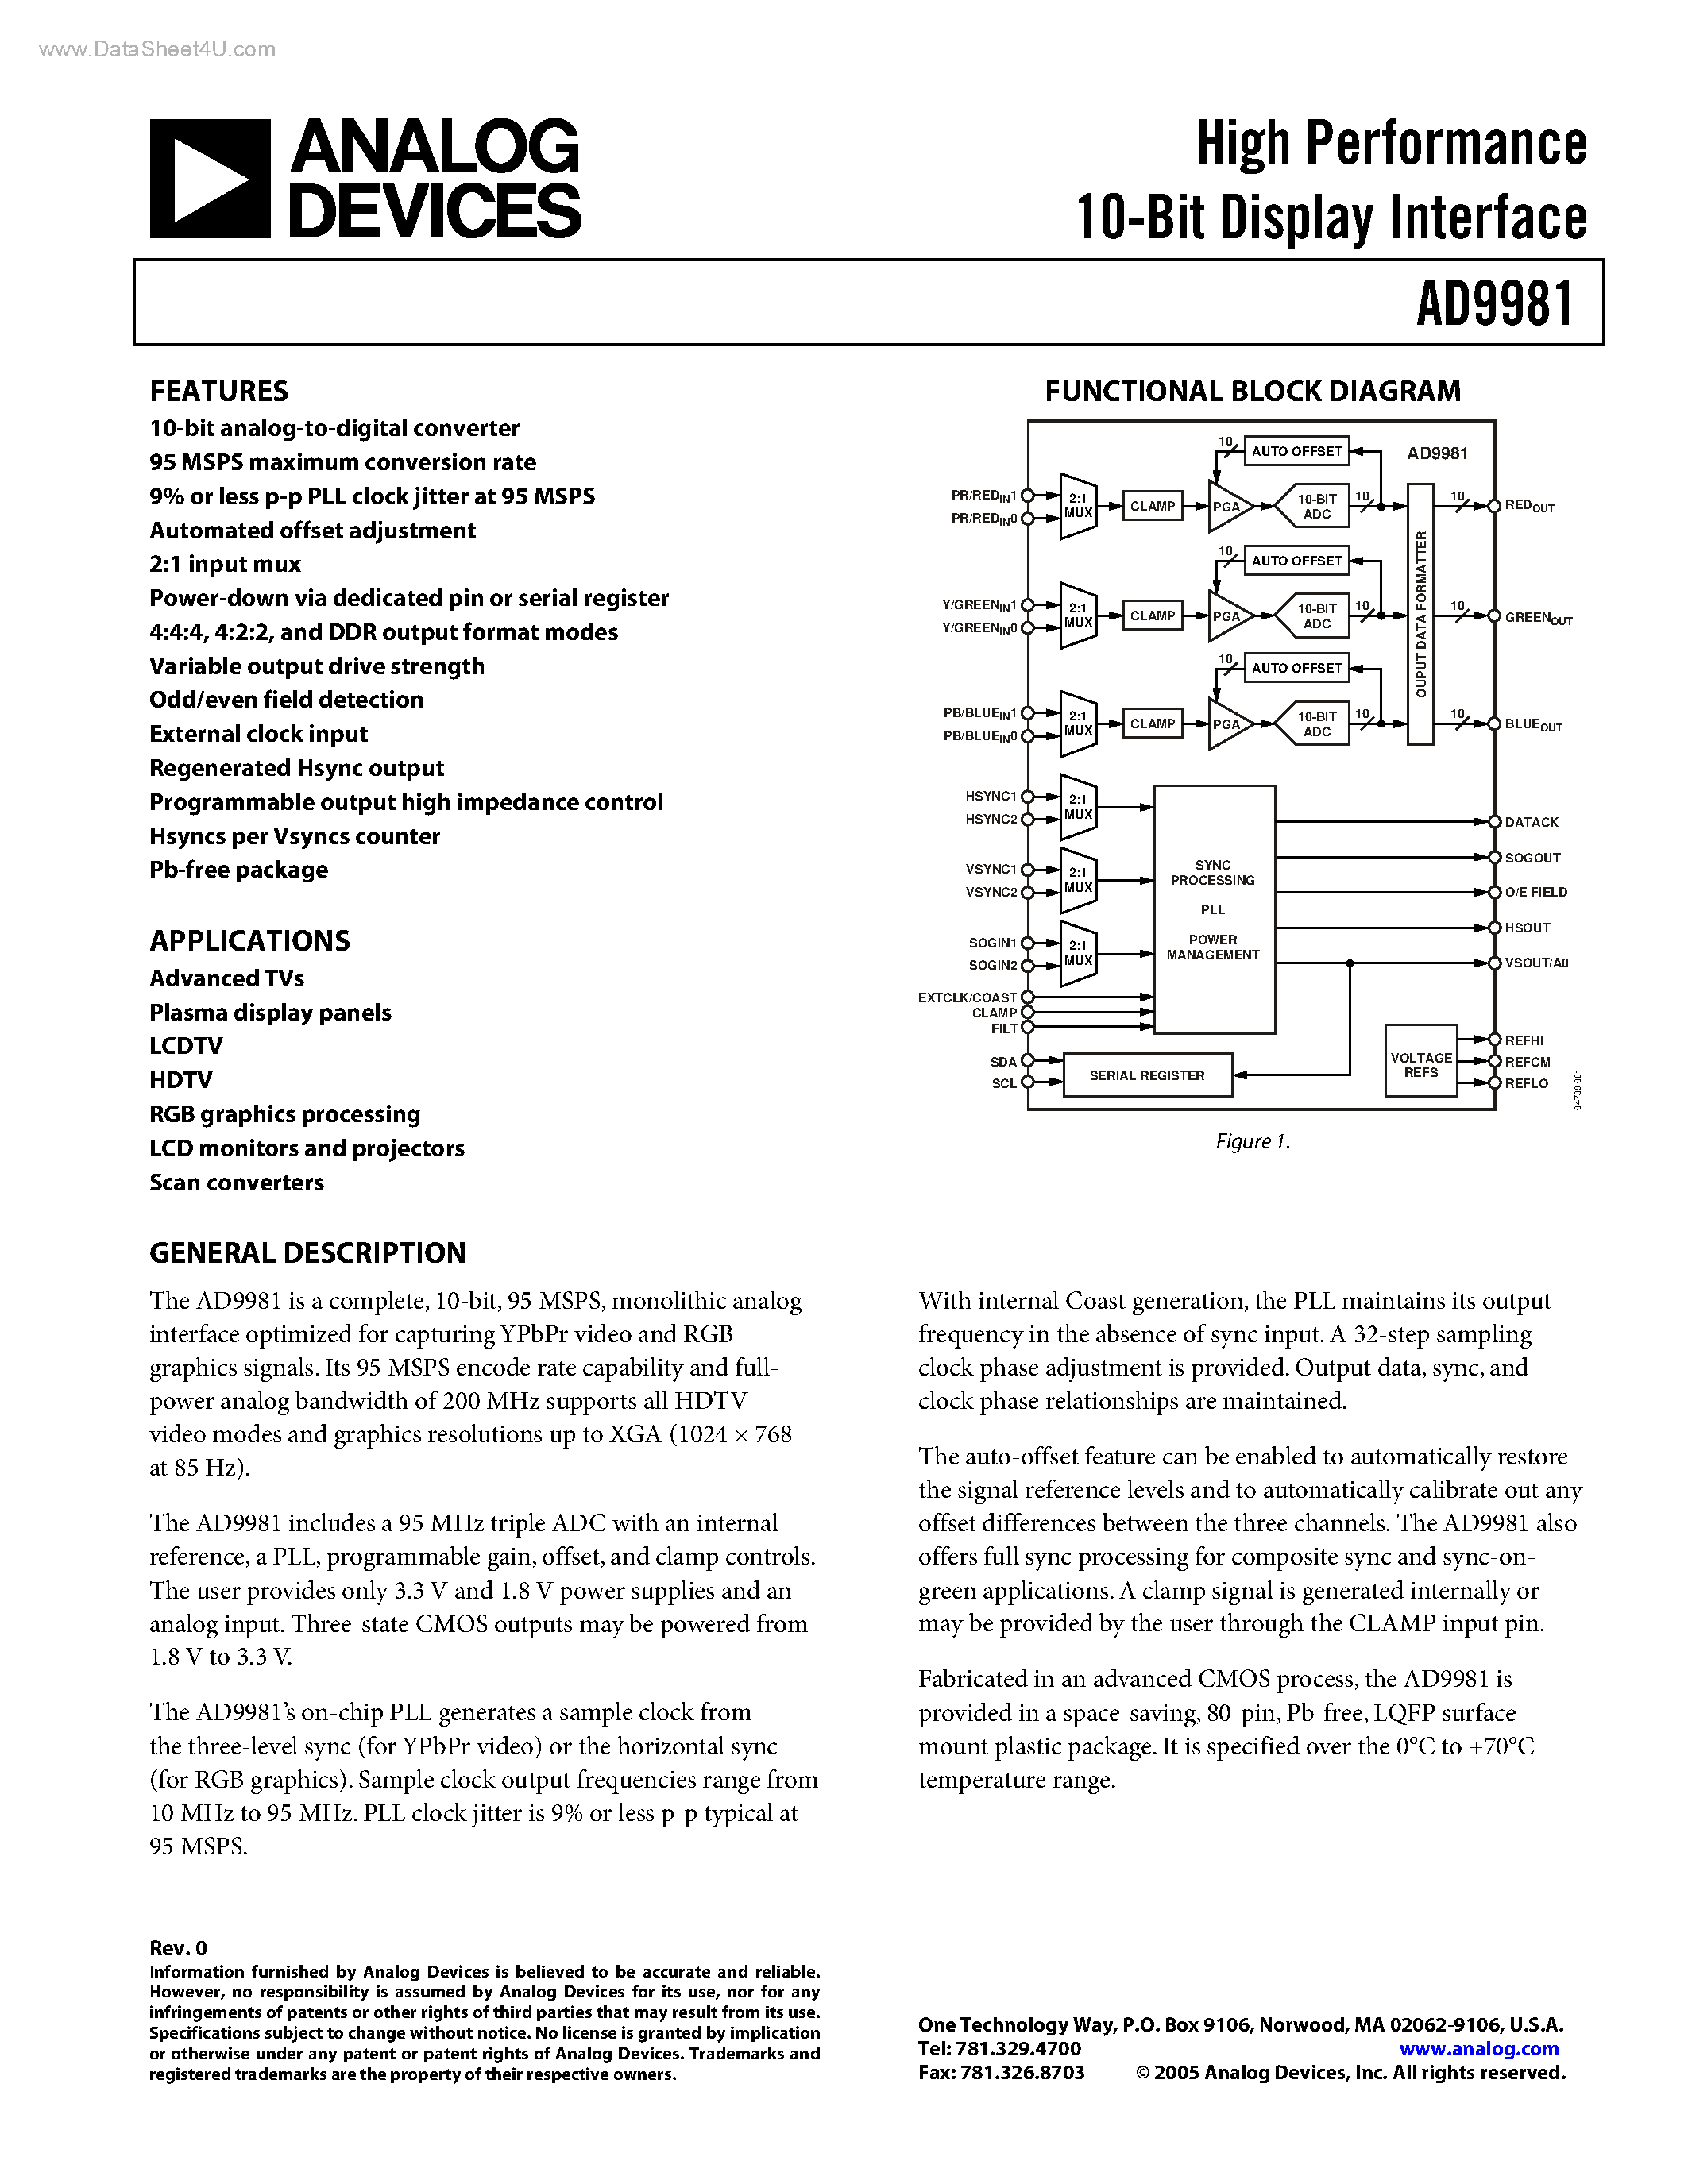 Даташит AD9981 - High Performance 10-Bit Display Interface страница 1